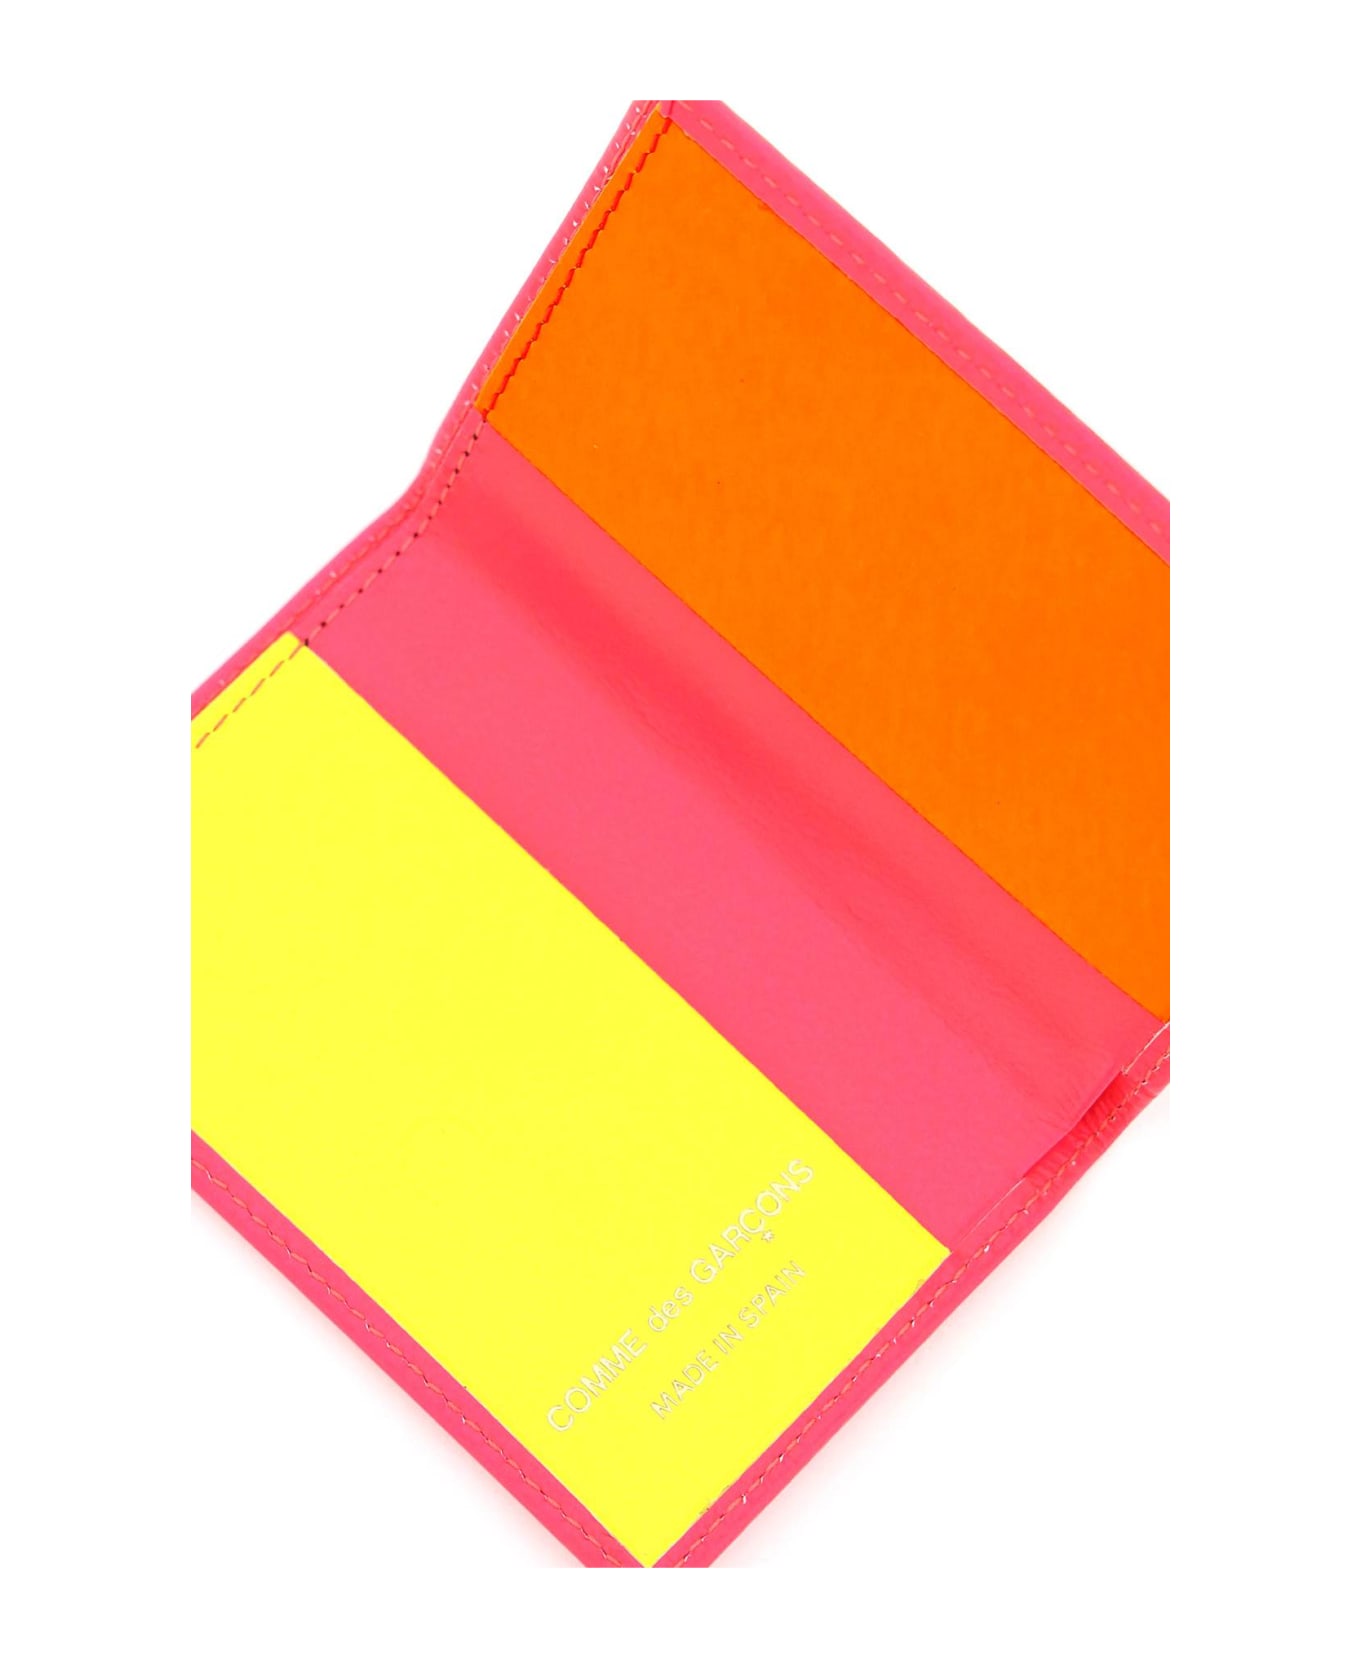 Comme des Garçons Wallet Super Fluo Wallet - PINK (Orange) 財布